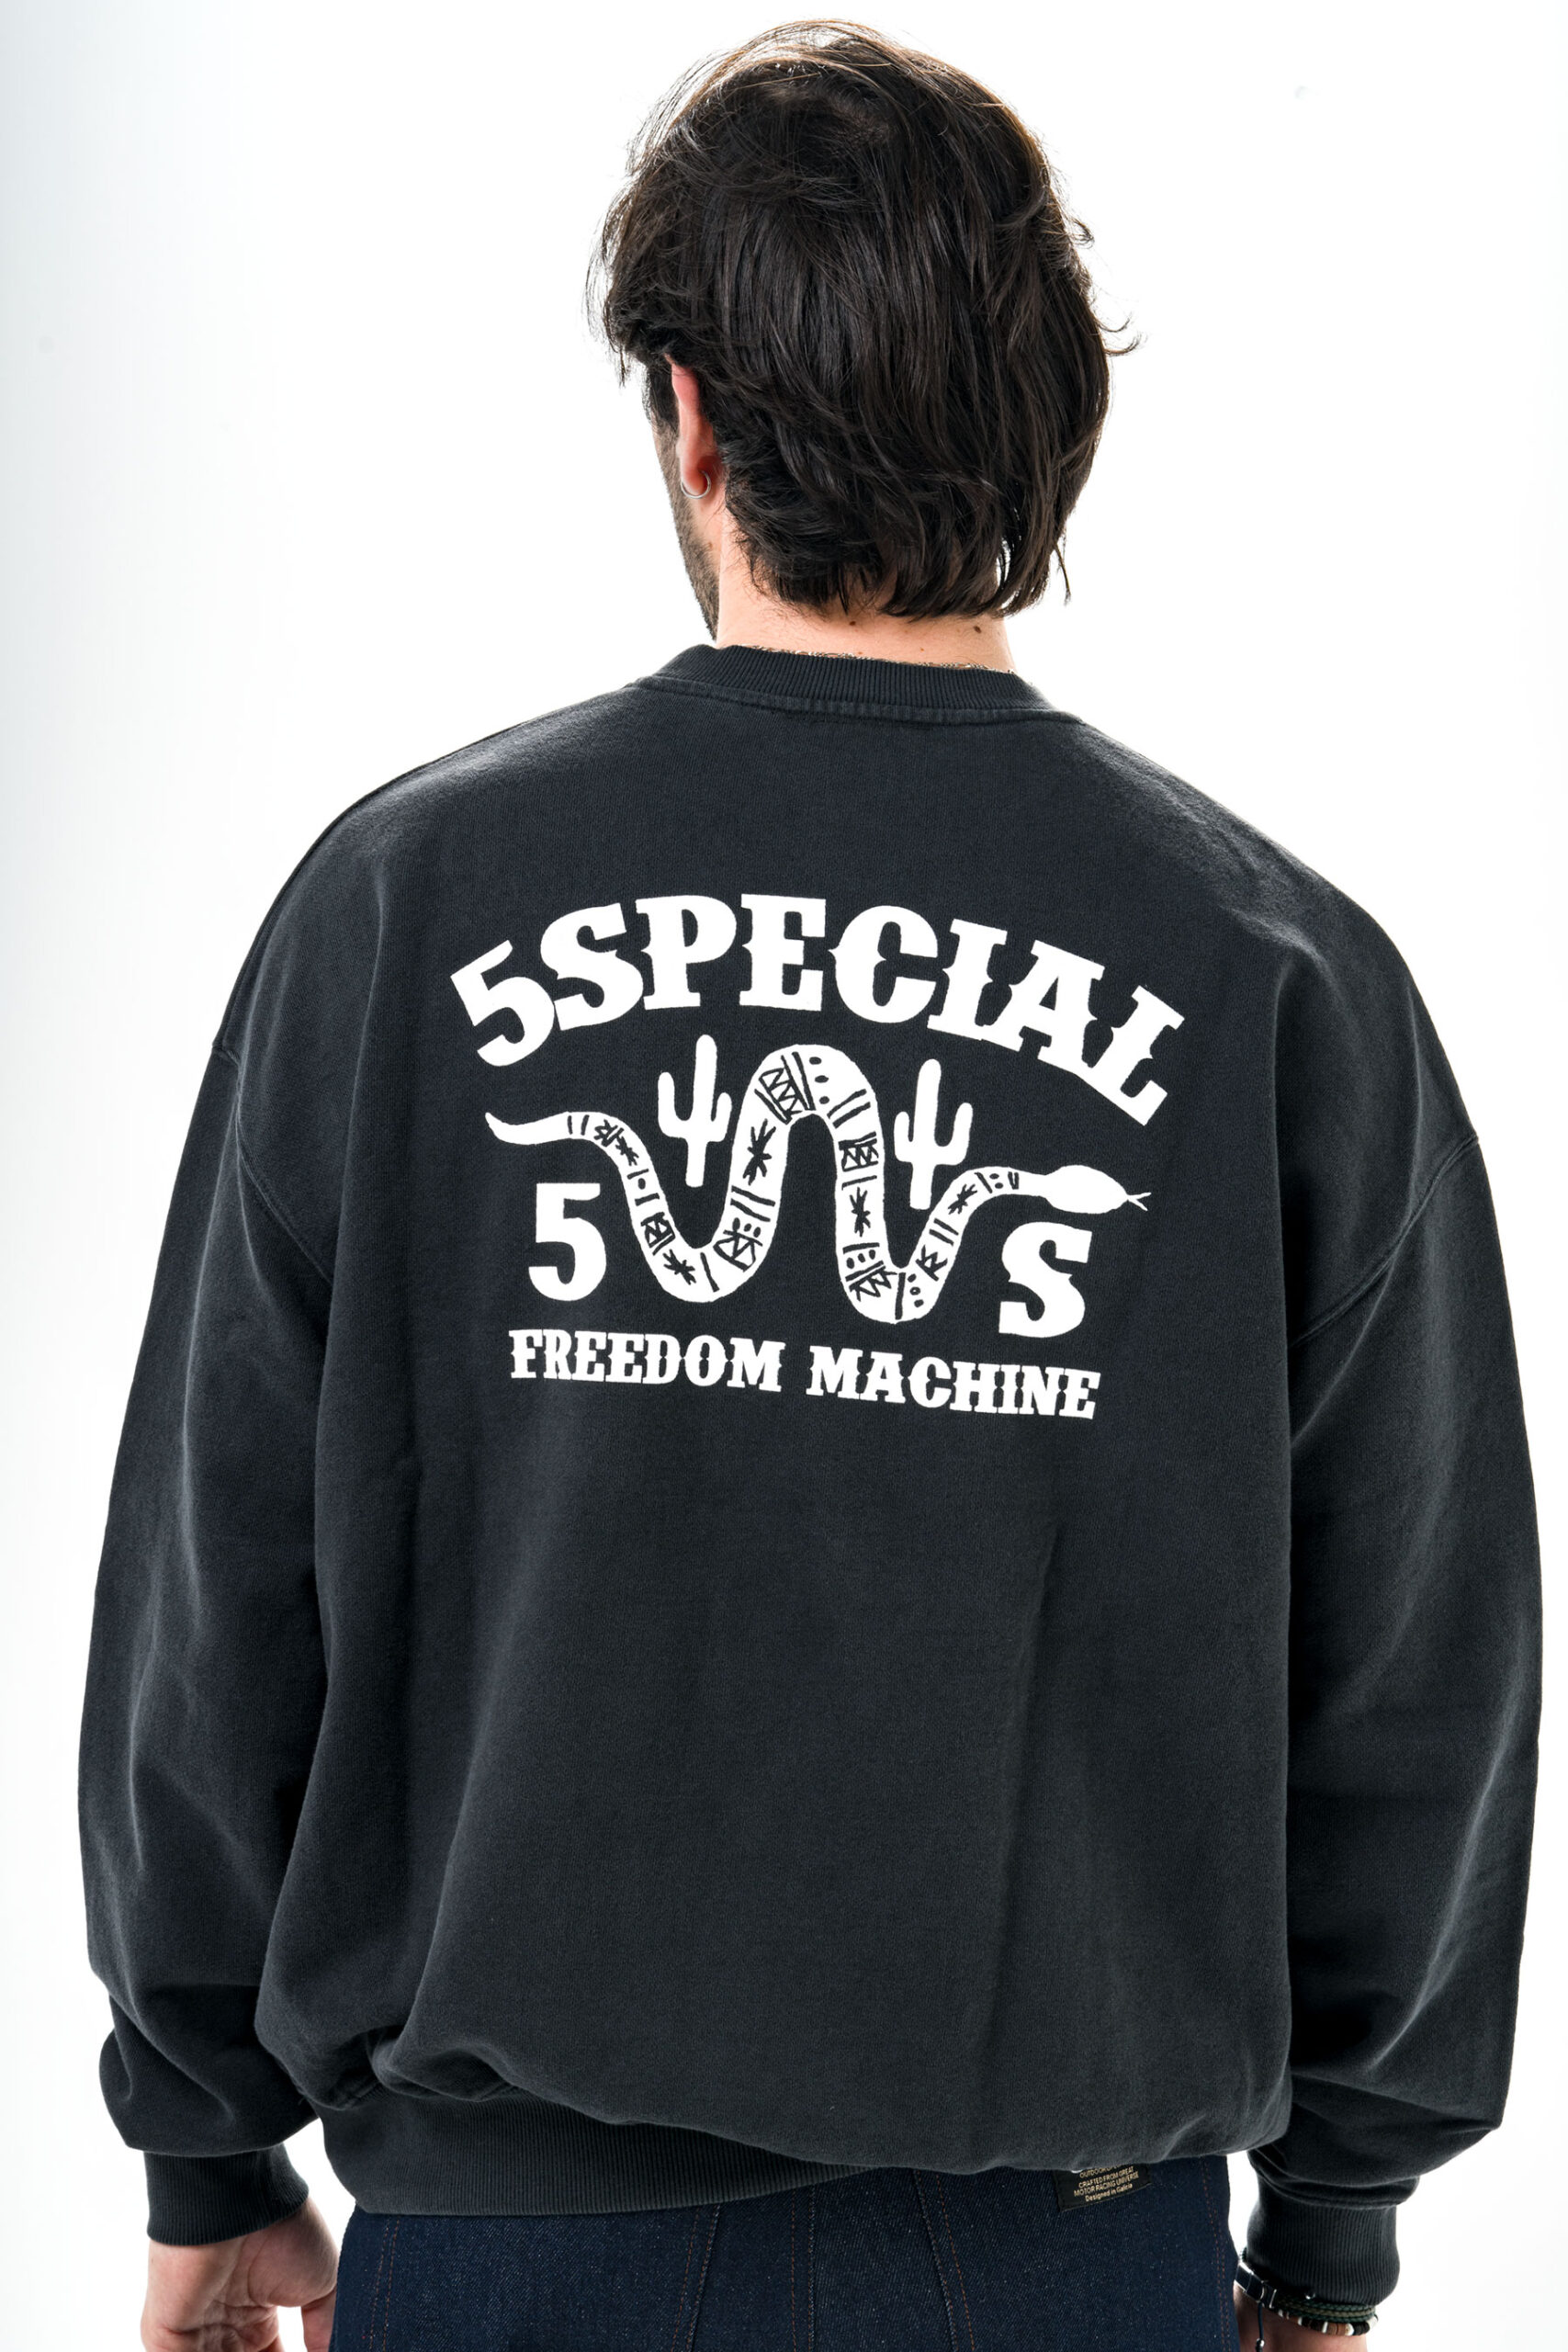 Freedom-Machine-Sweatshirt-5special